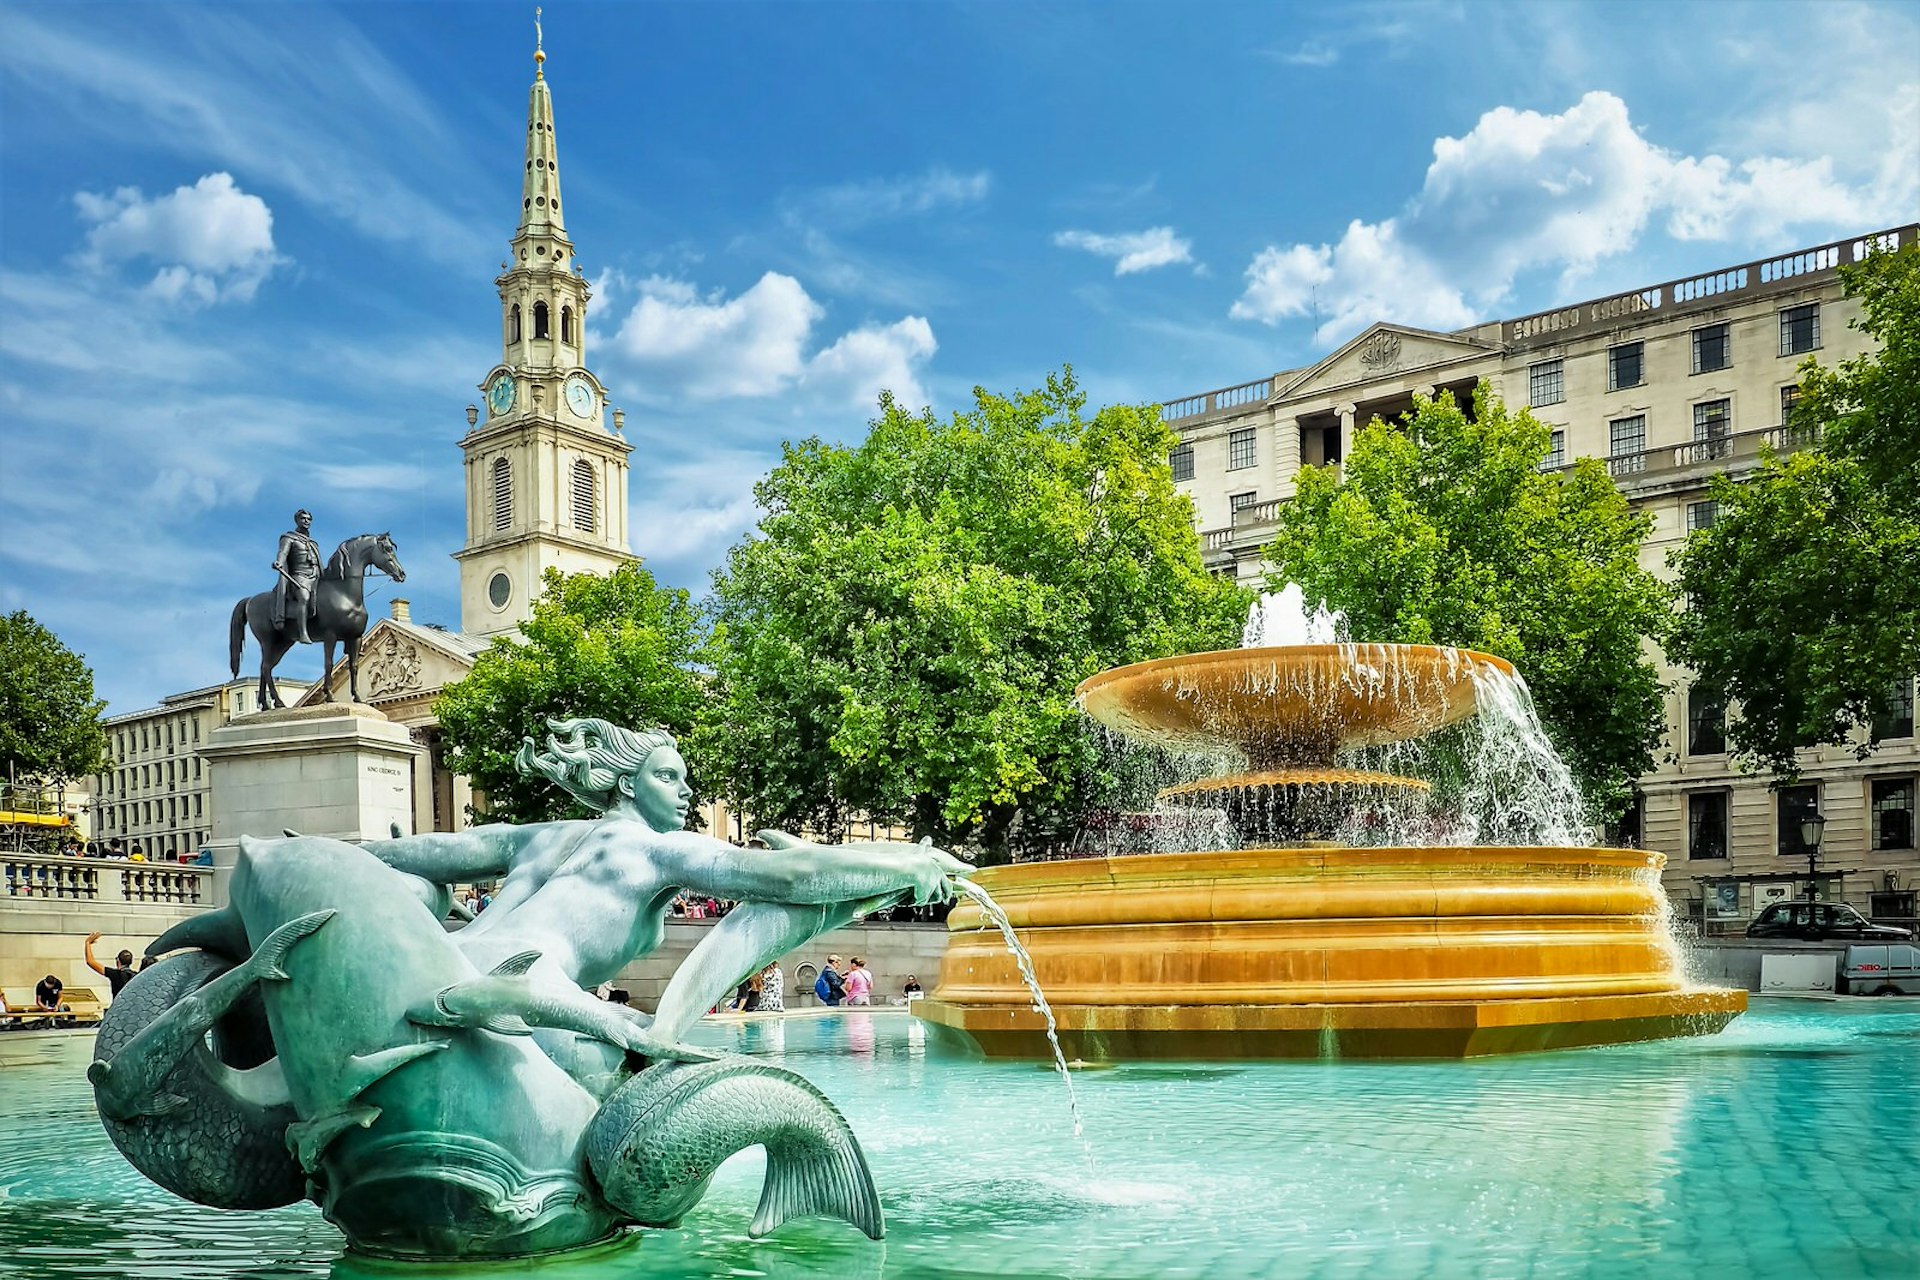 Fountains and architecture around Trafalgar Square, London